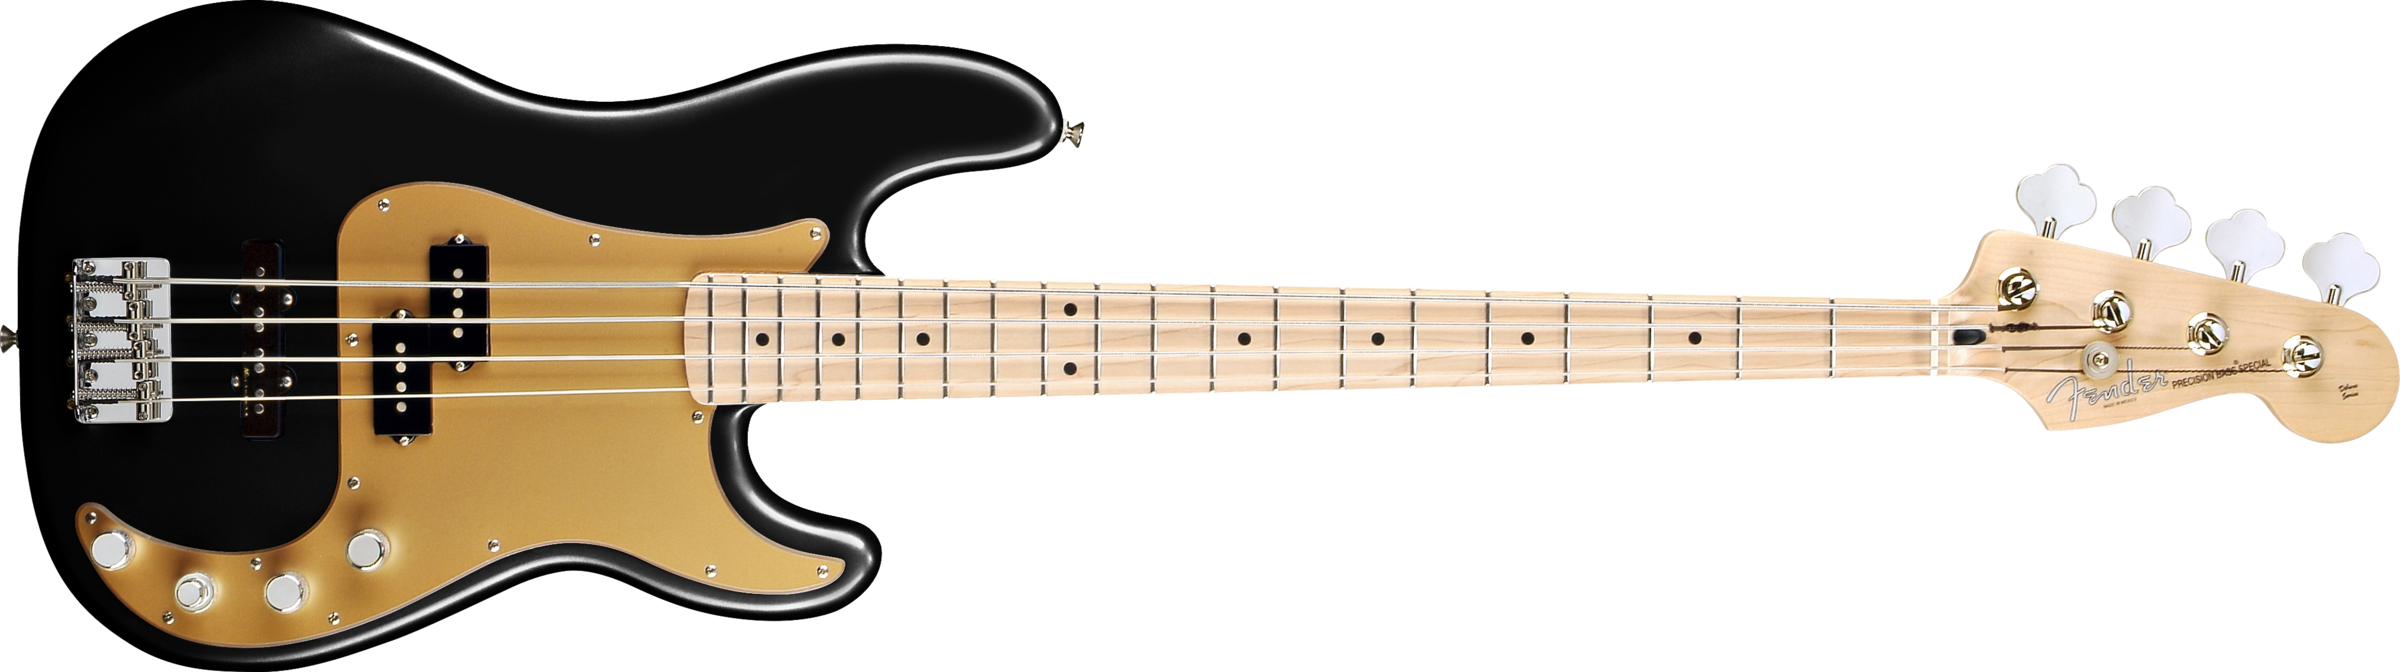 Bass Fingerboard Fender Precision Guitar Mustang Transparent Clipart